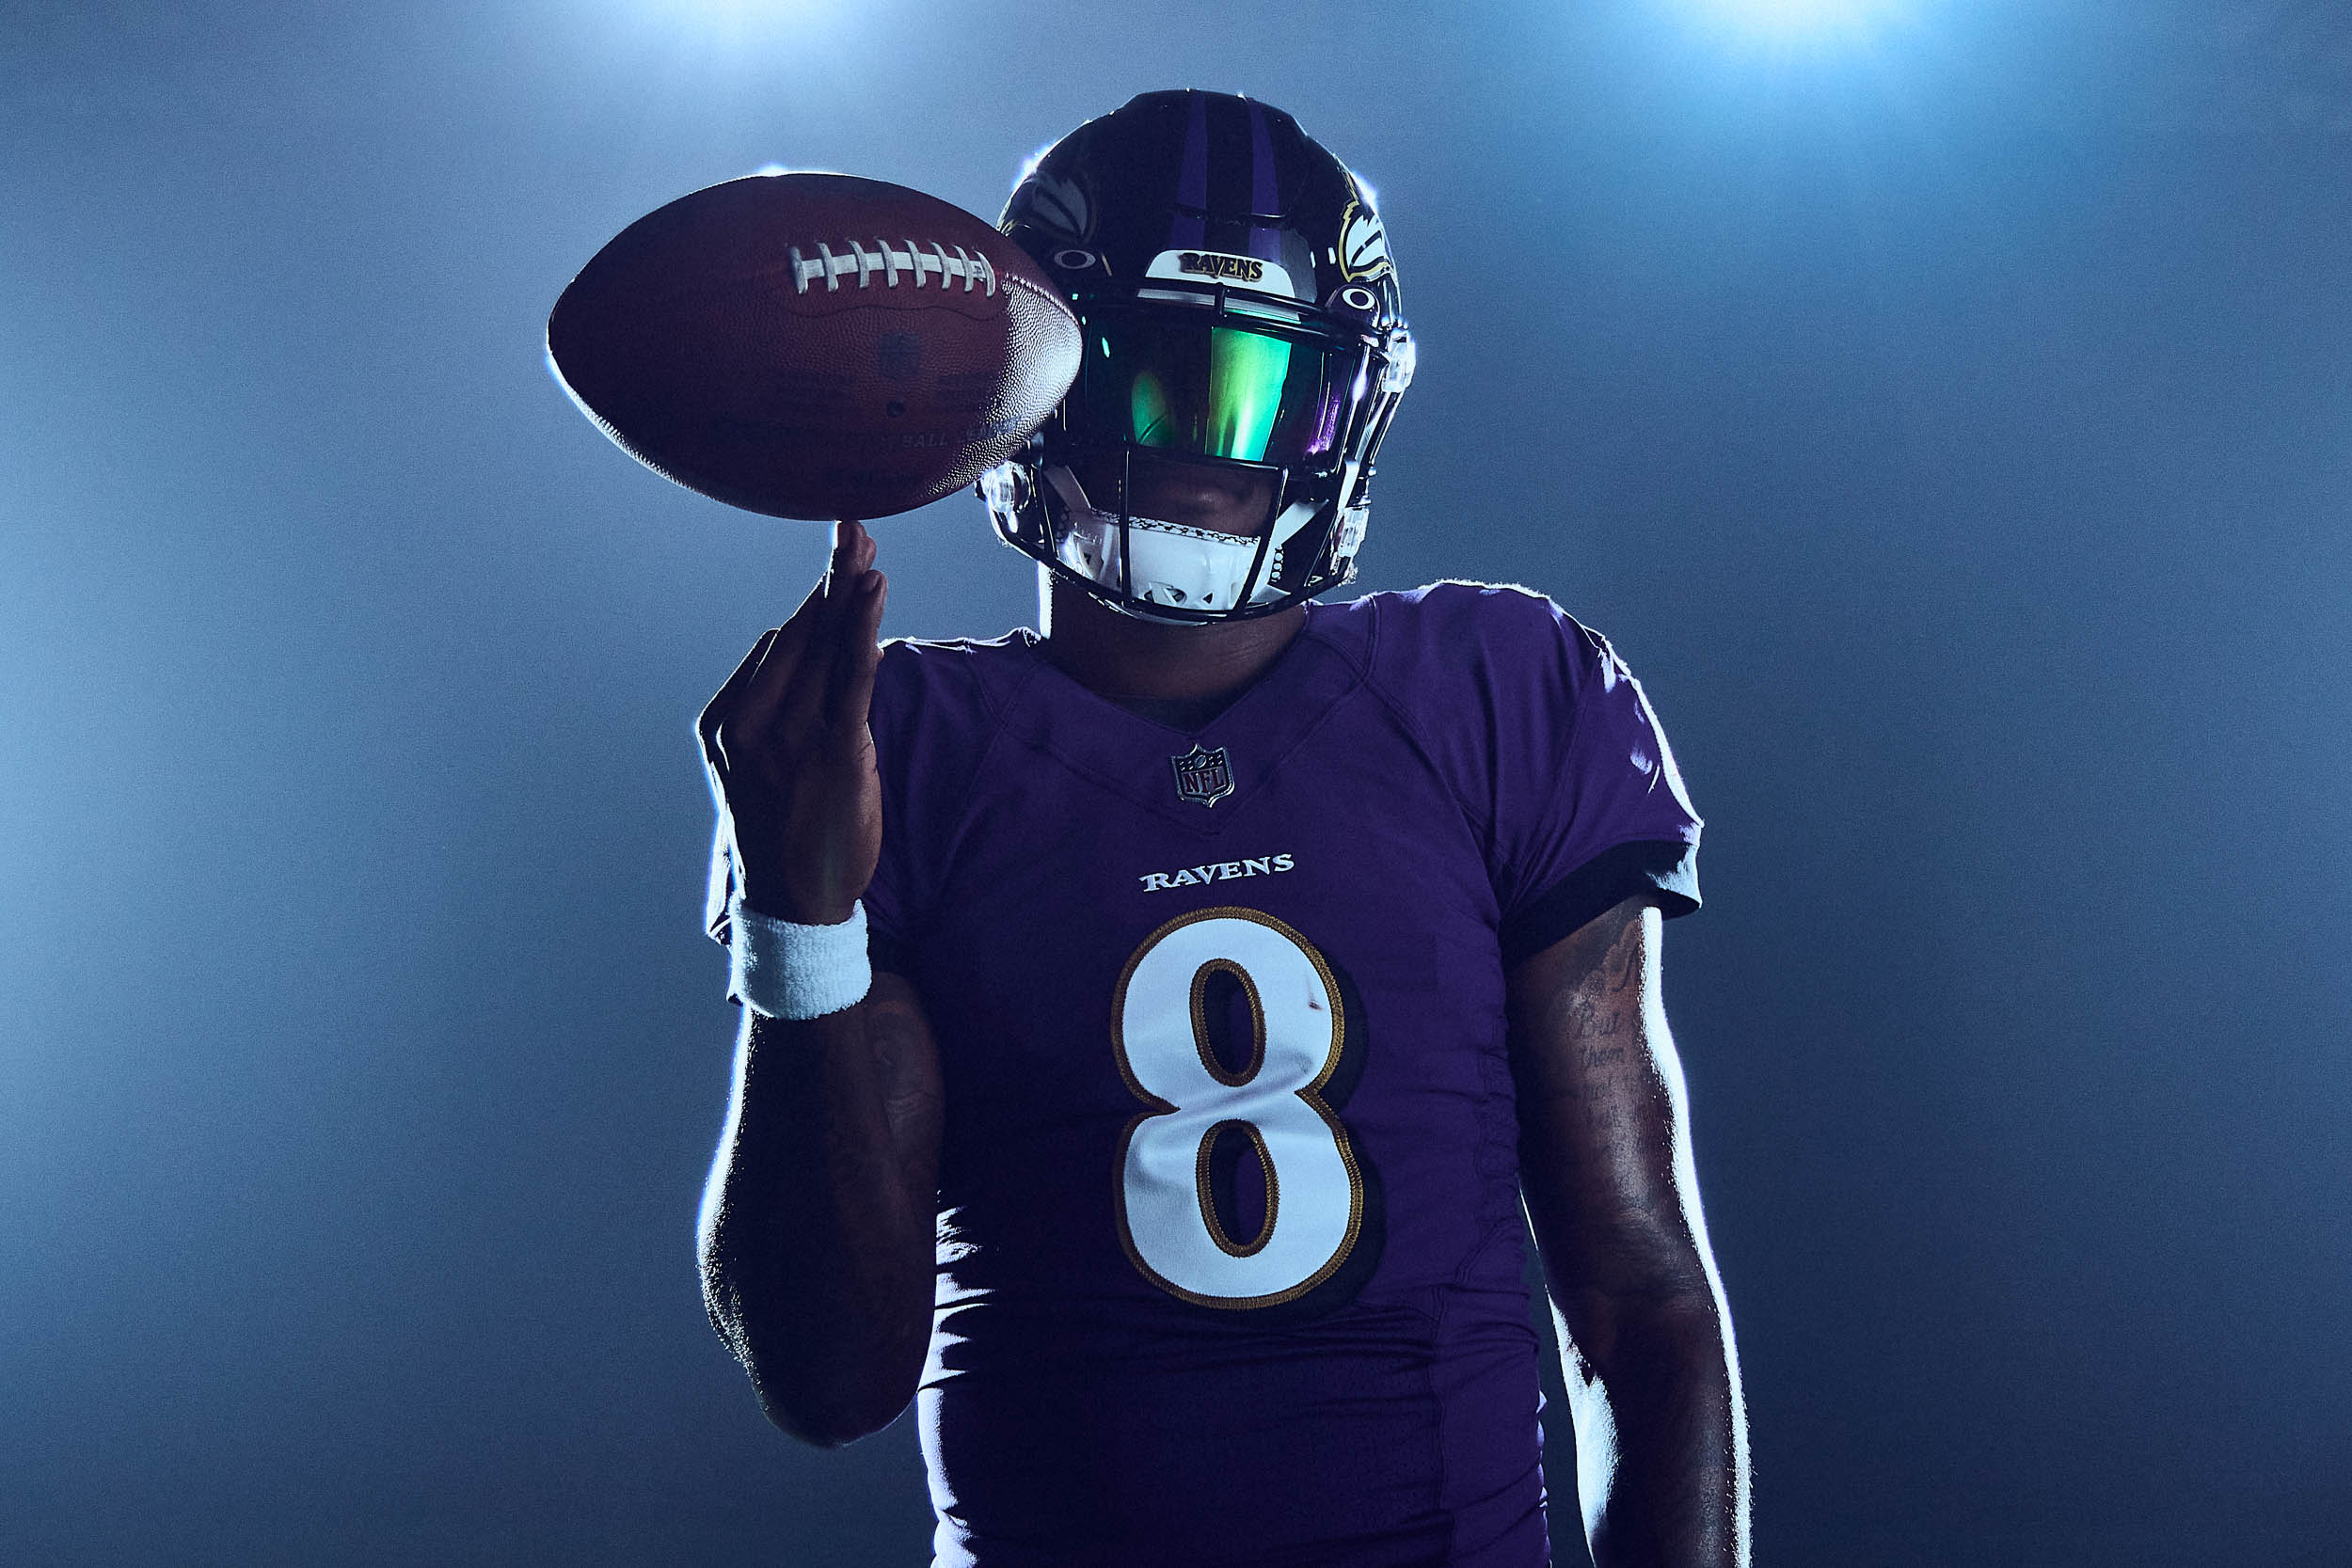 Commercial sports photographer creates advertising photography of NFL athlete Lamar Jackson